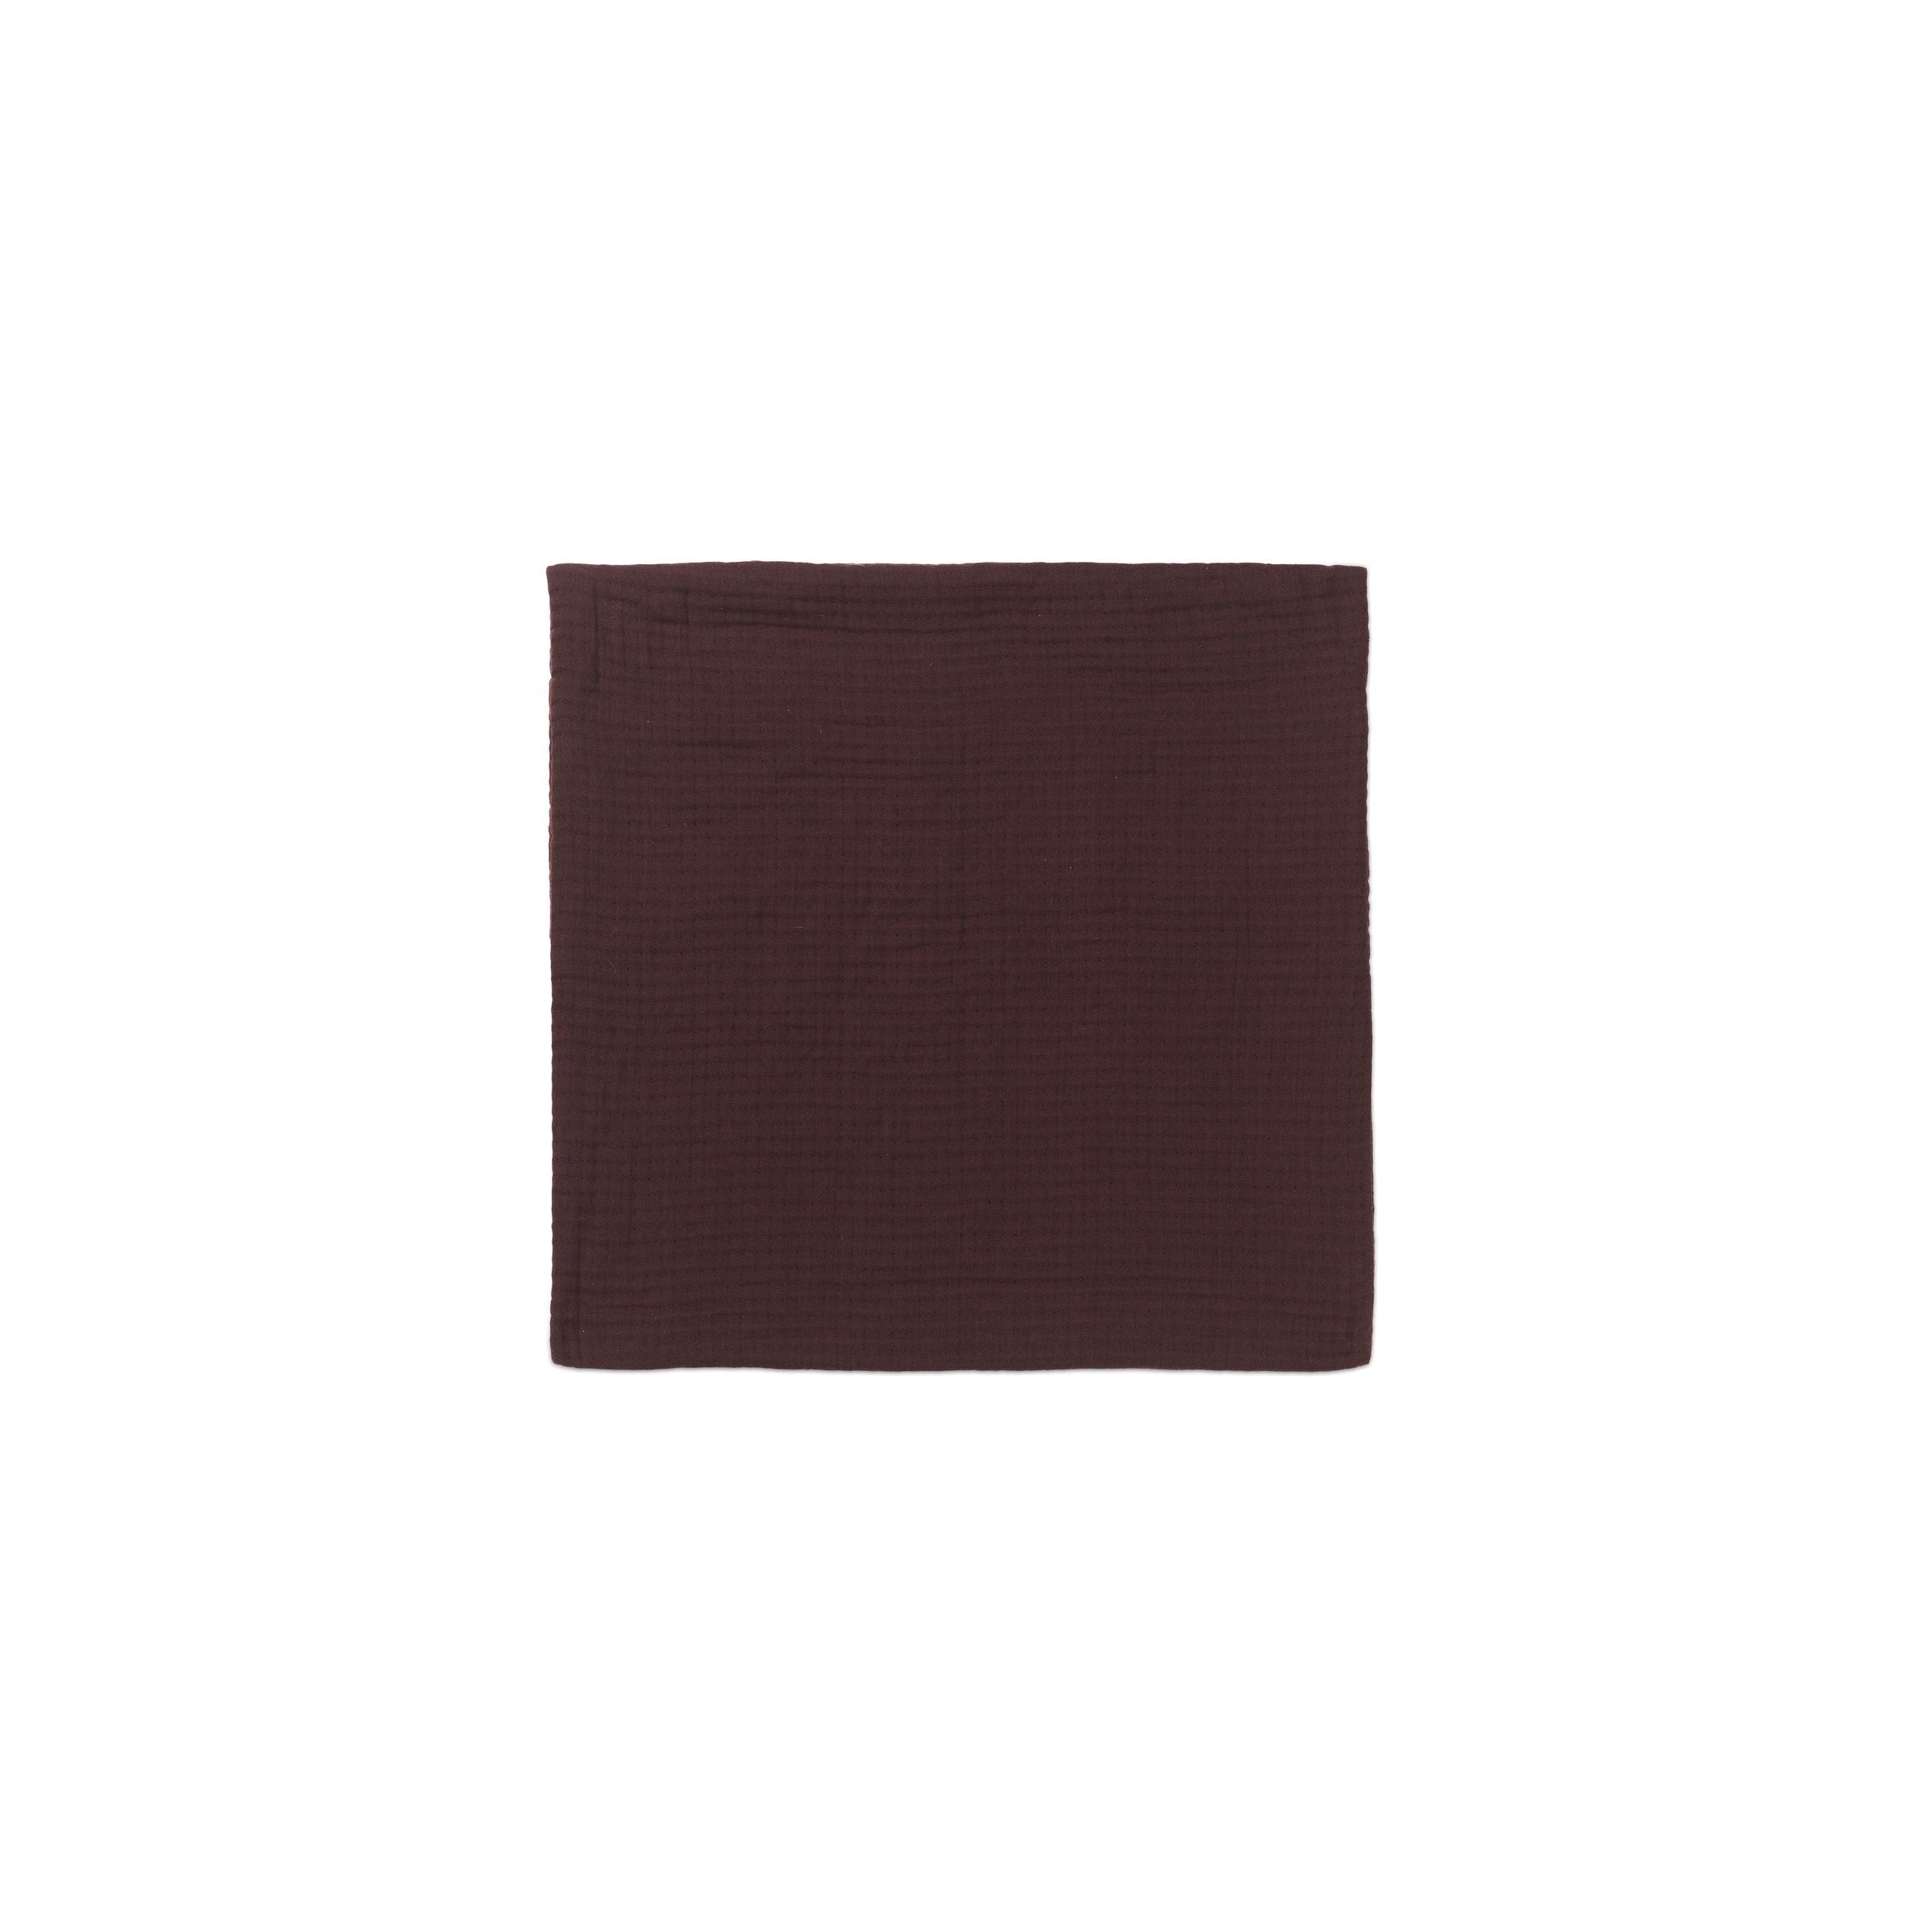 Juna View Cushion 45x45 Cm, Chocolate